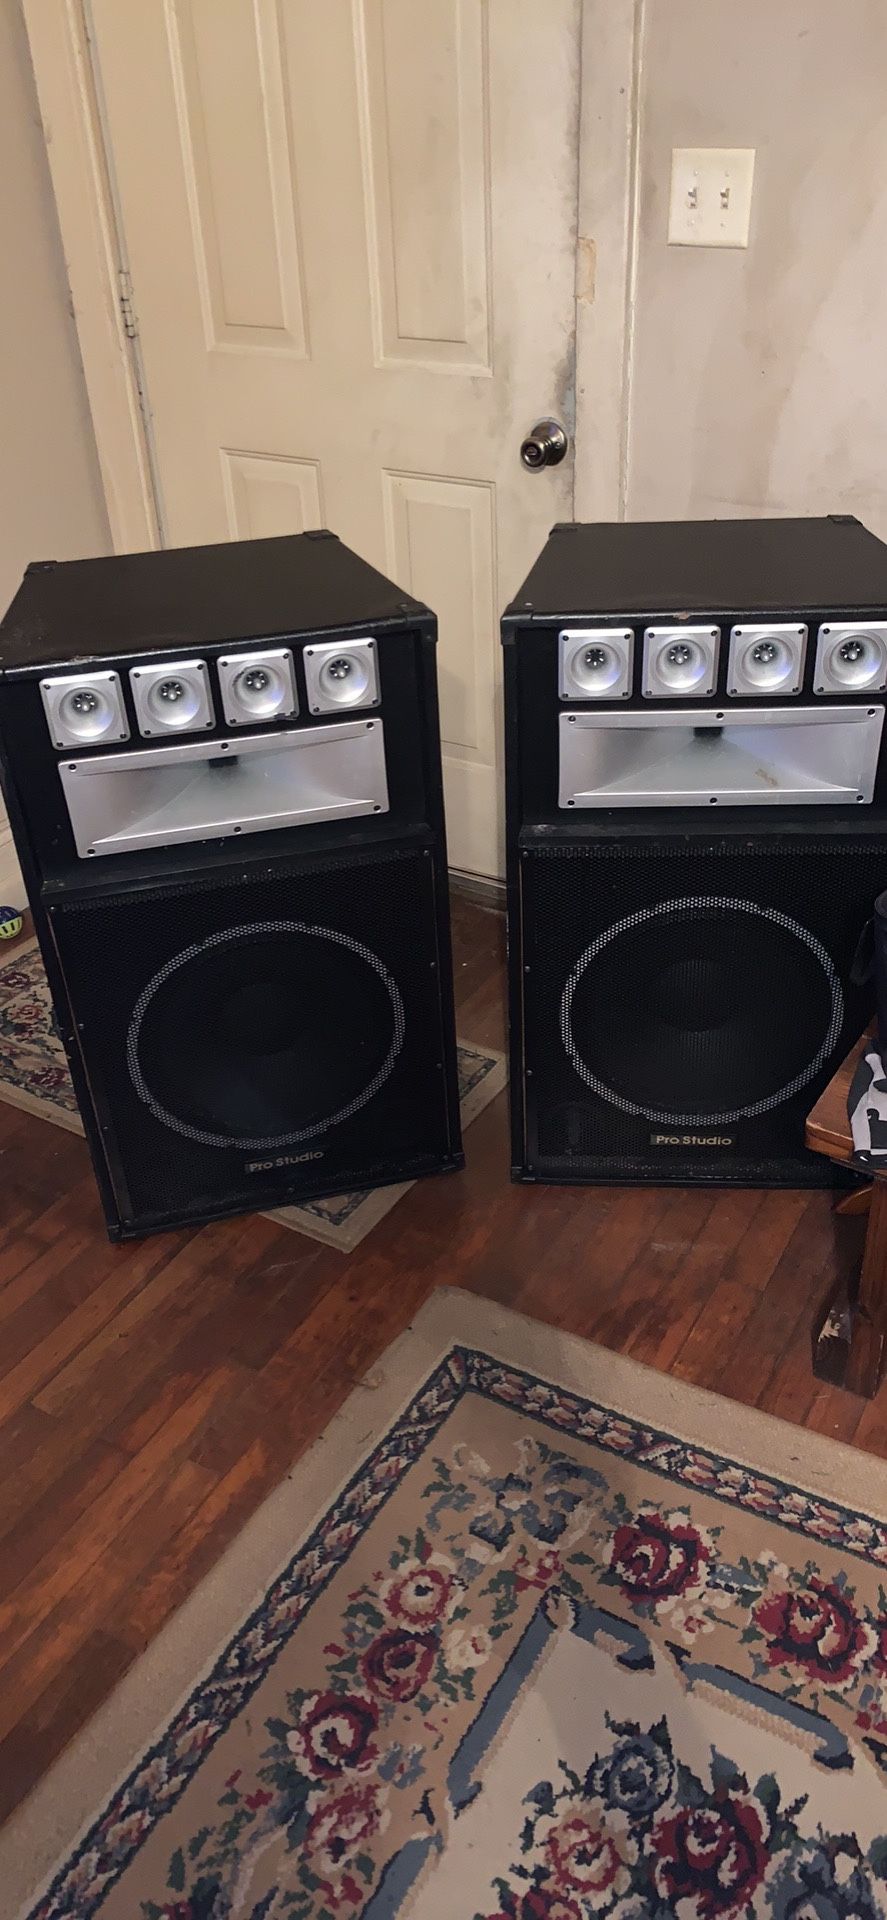 Pro studio 15 inch speakers